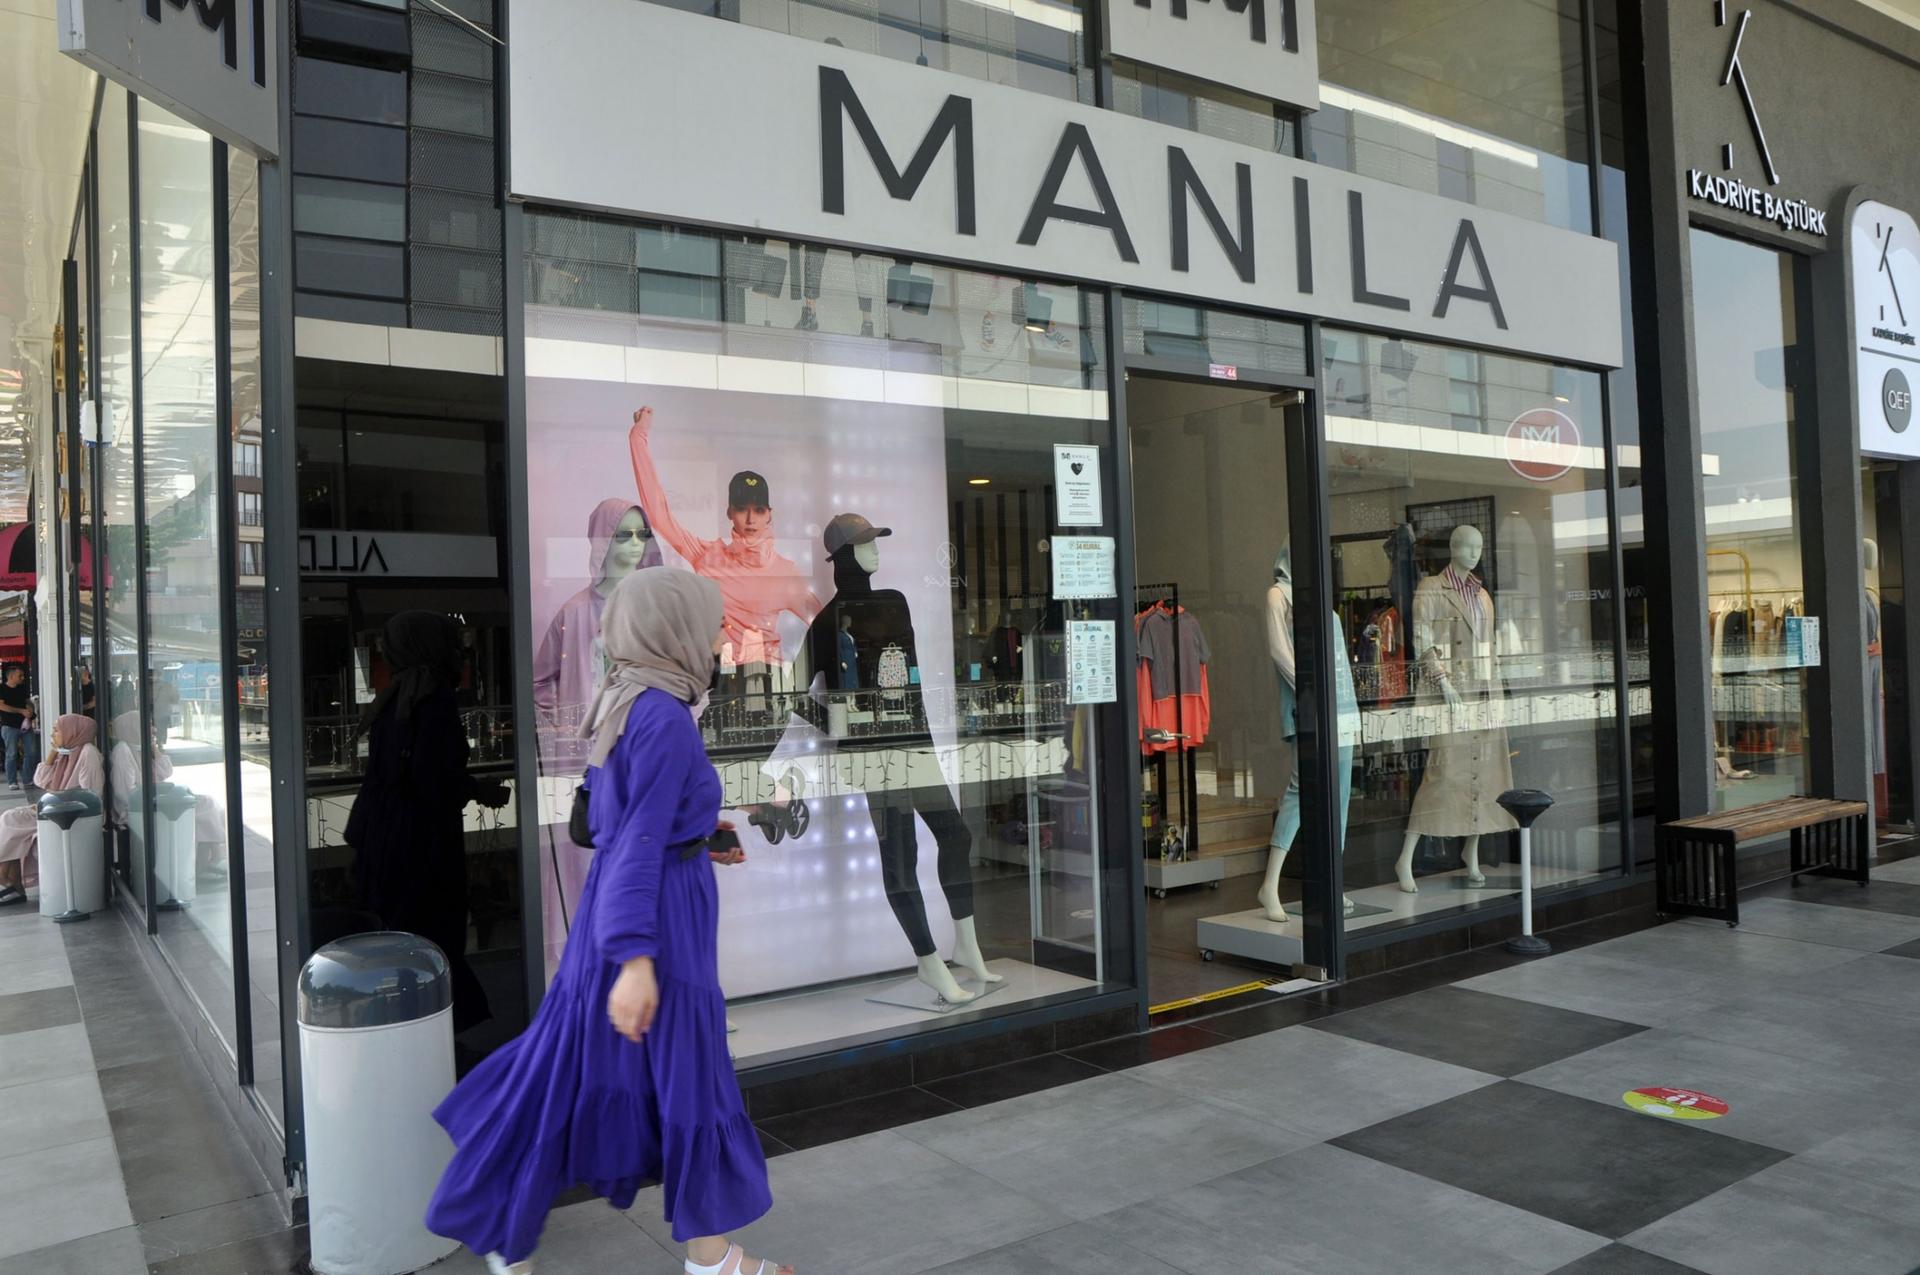 Manila is a sportswear company in Turkey that sells a swimwear hijab.